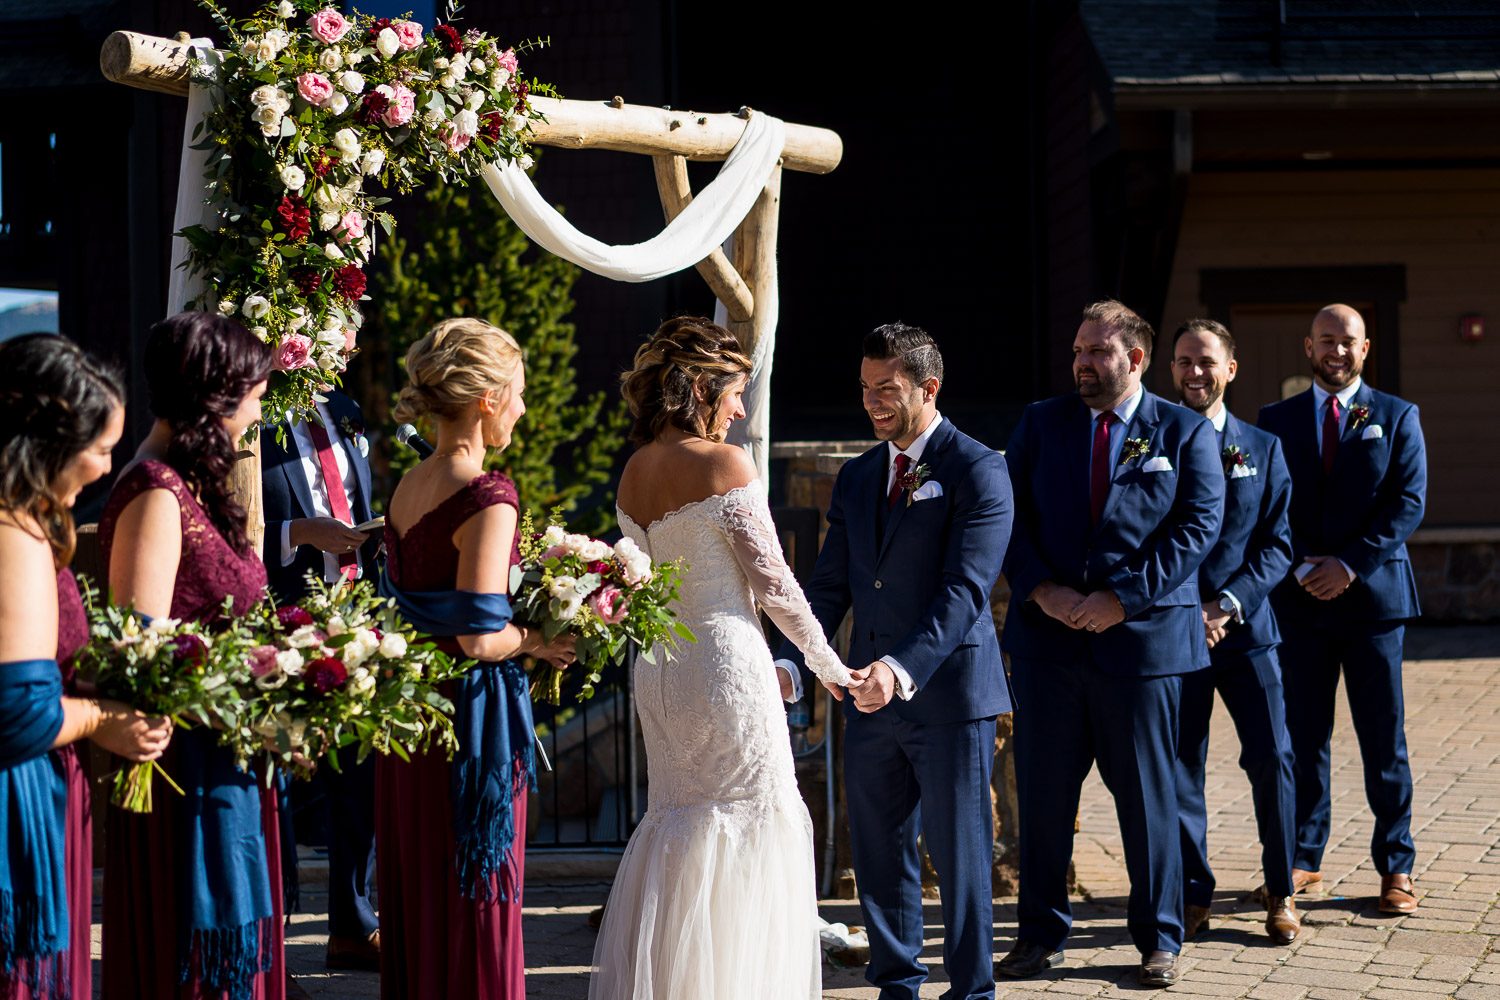 the sevens Breckenridge wedding ceremony